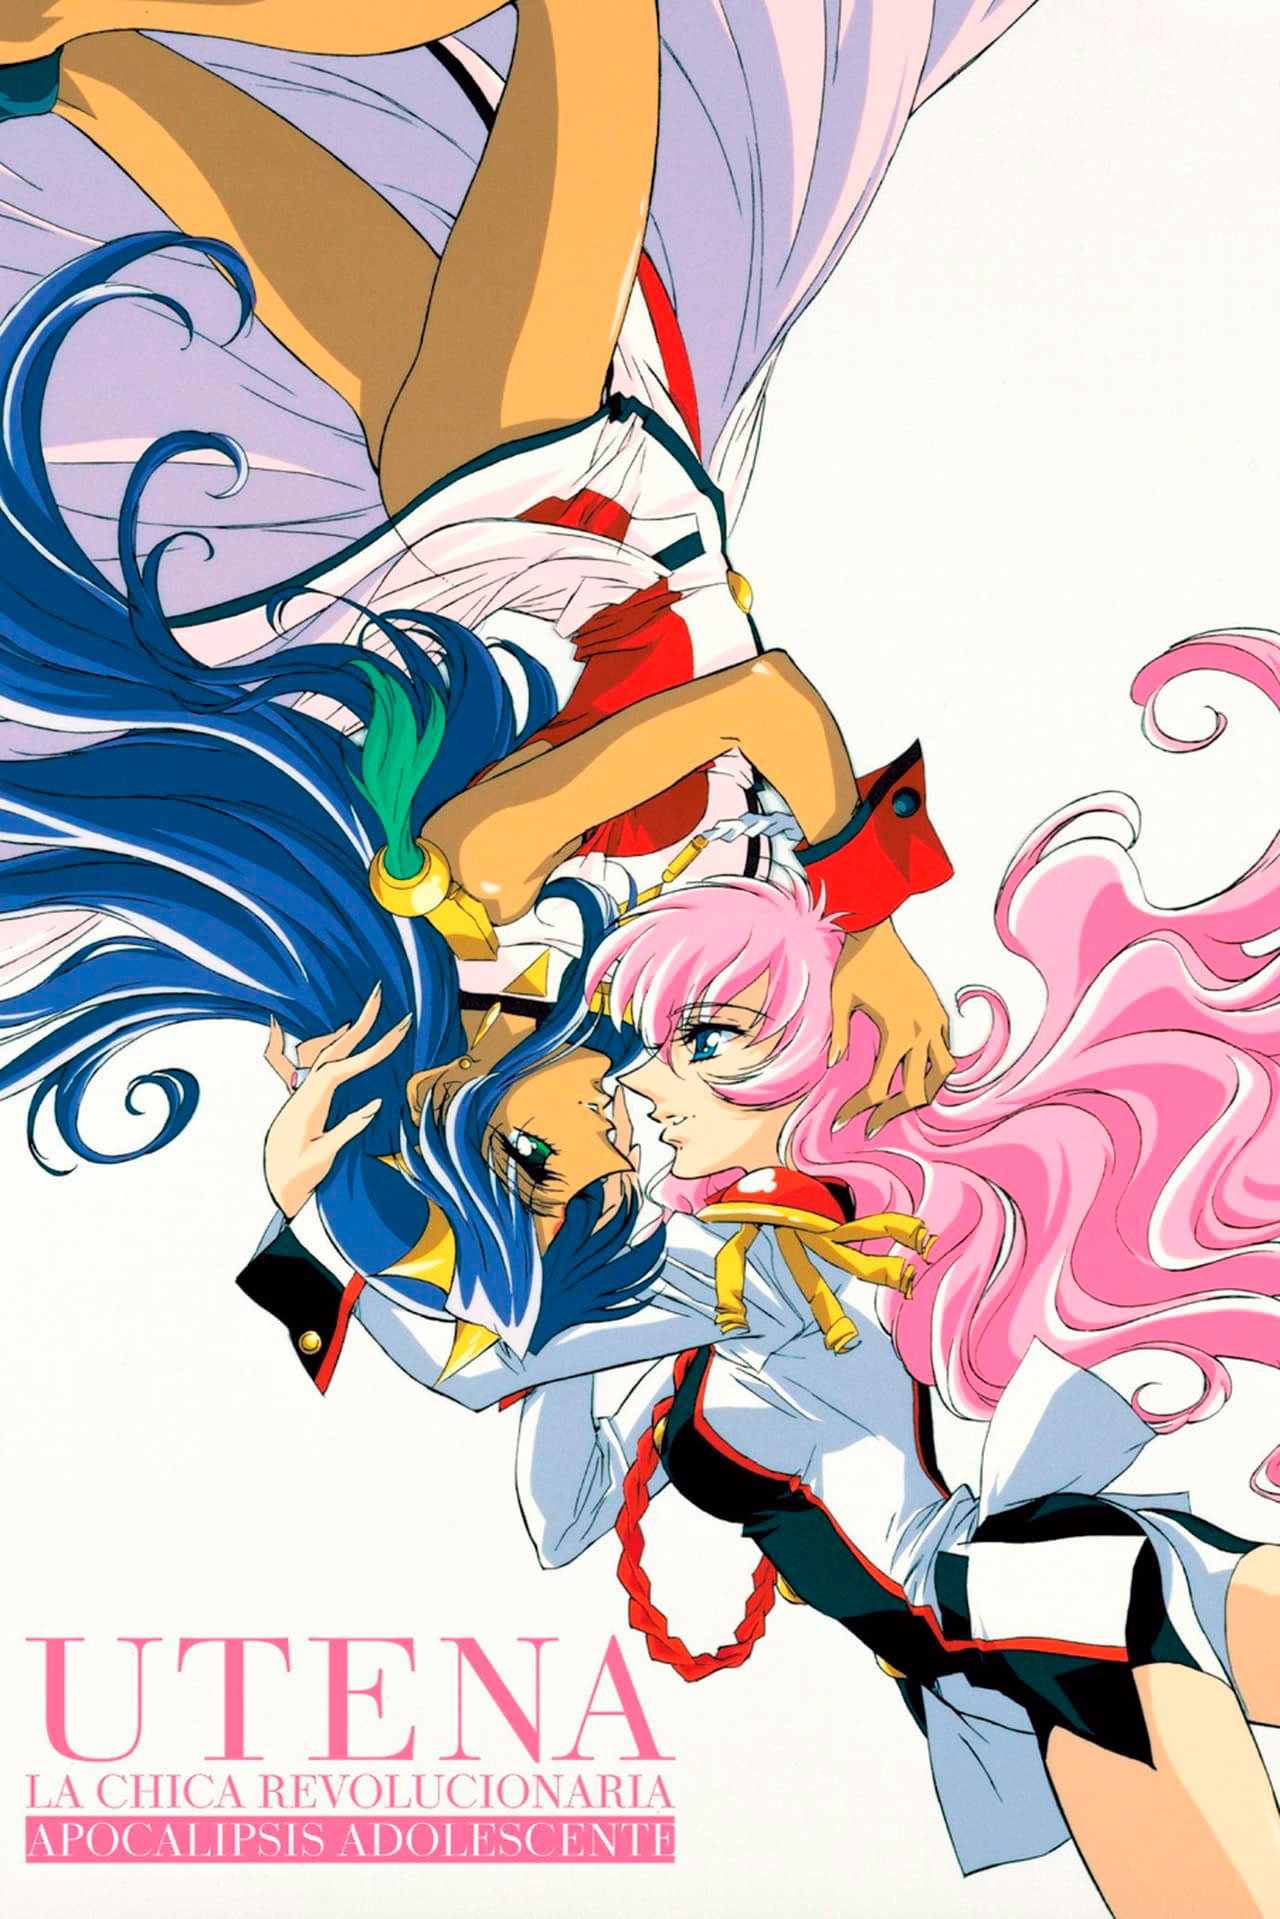 Classic TV Anime Revolutionary Girl Utena To Stream On Crunchyroll  Yuri  Anime News 百合